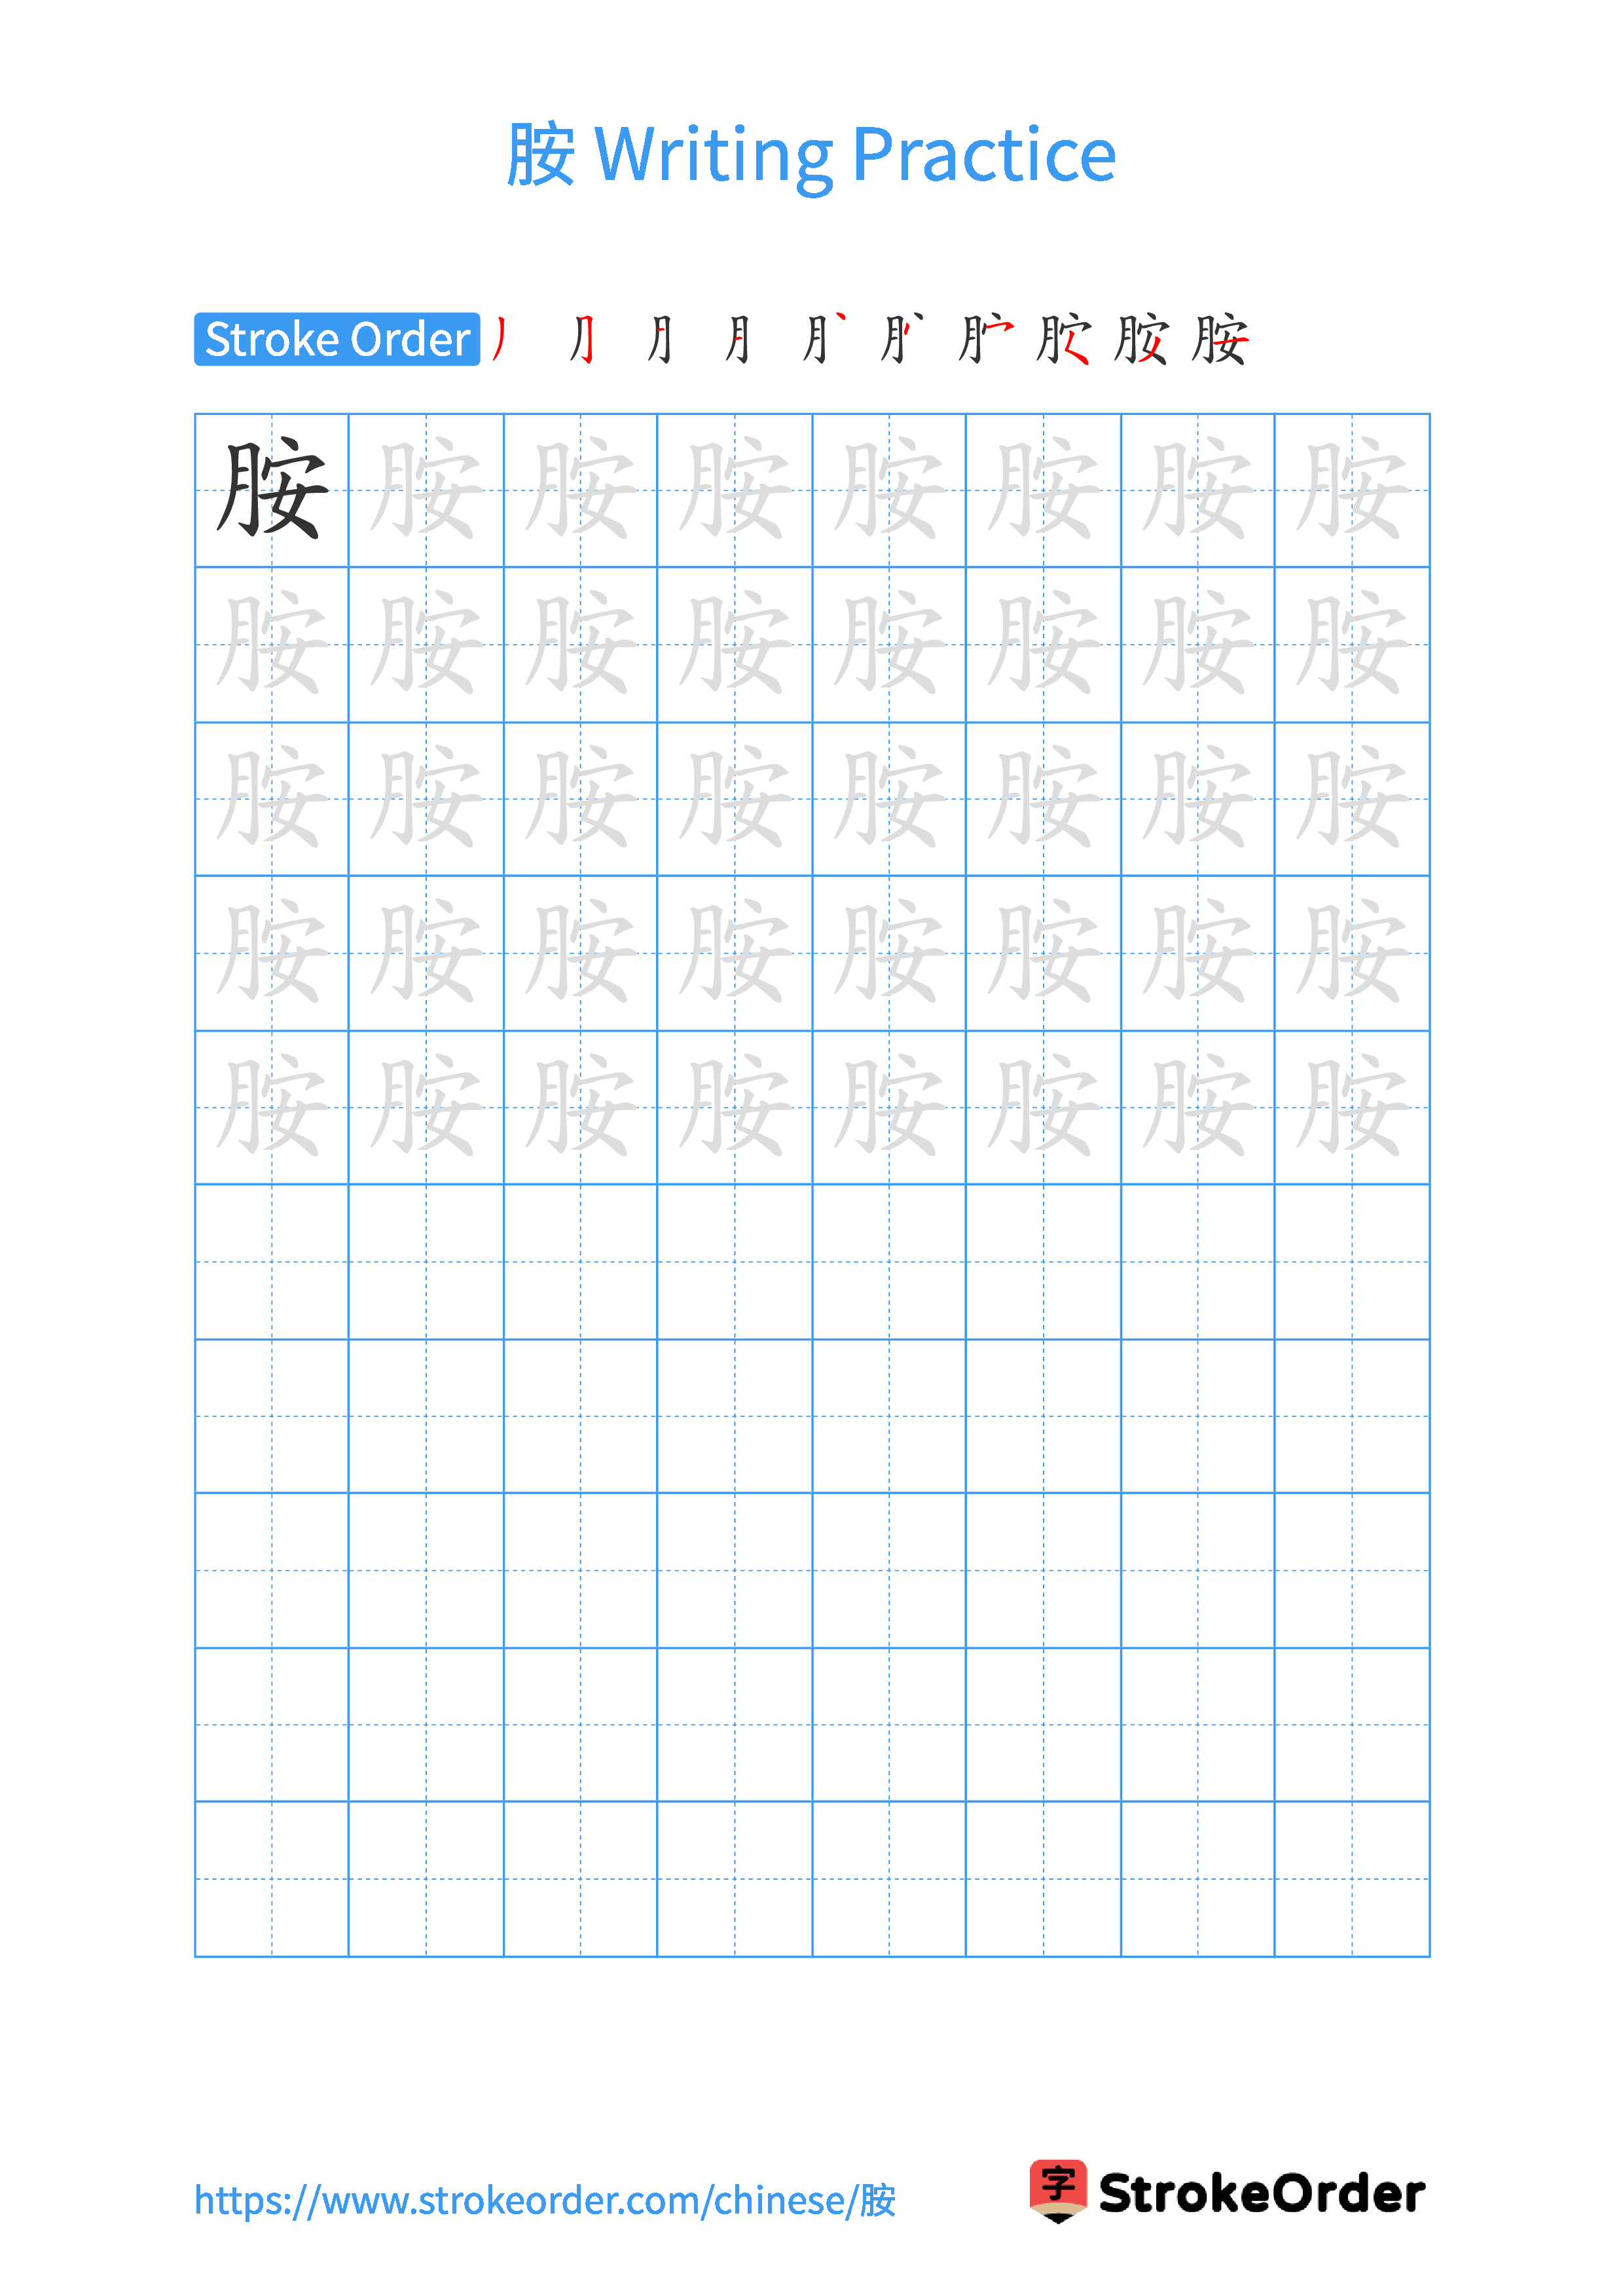 Printable Handwriting Practice Worksheet of the Chinese character 胺 in Portrait Orientation (Tian Zi Ge)